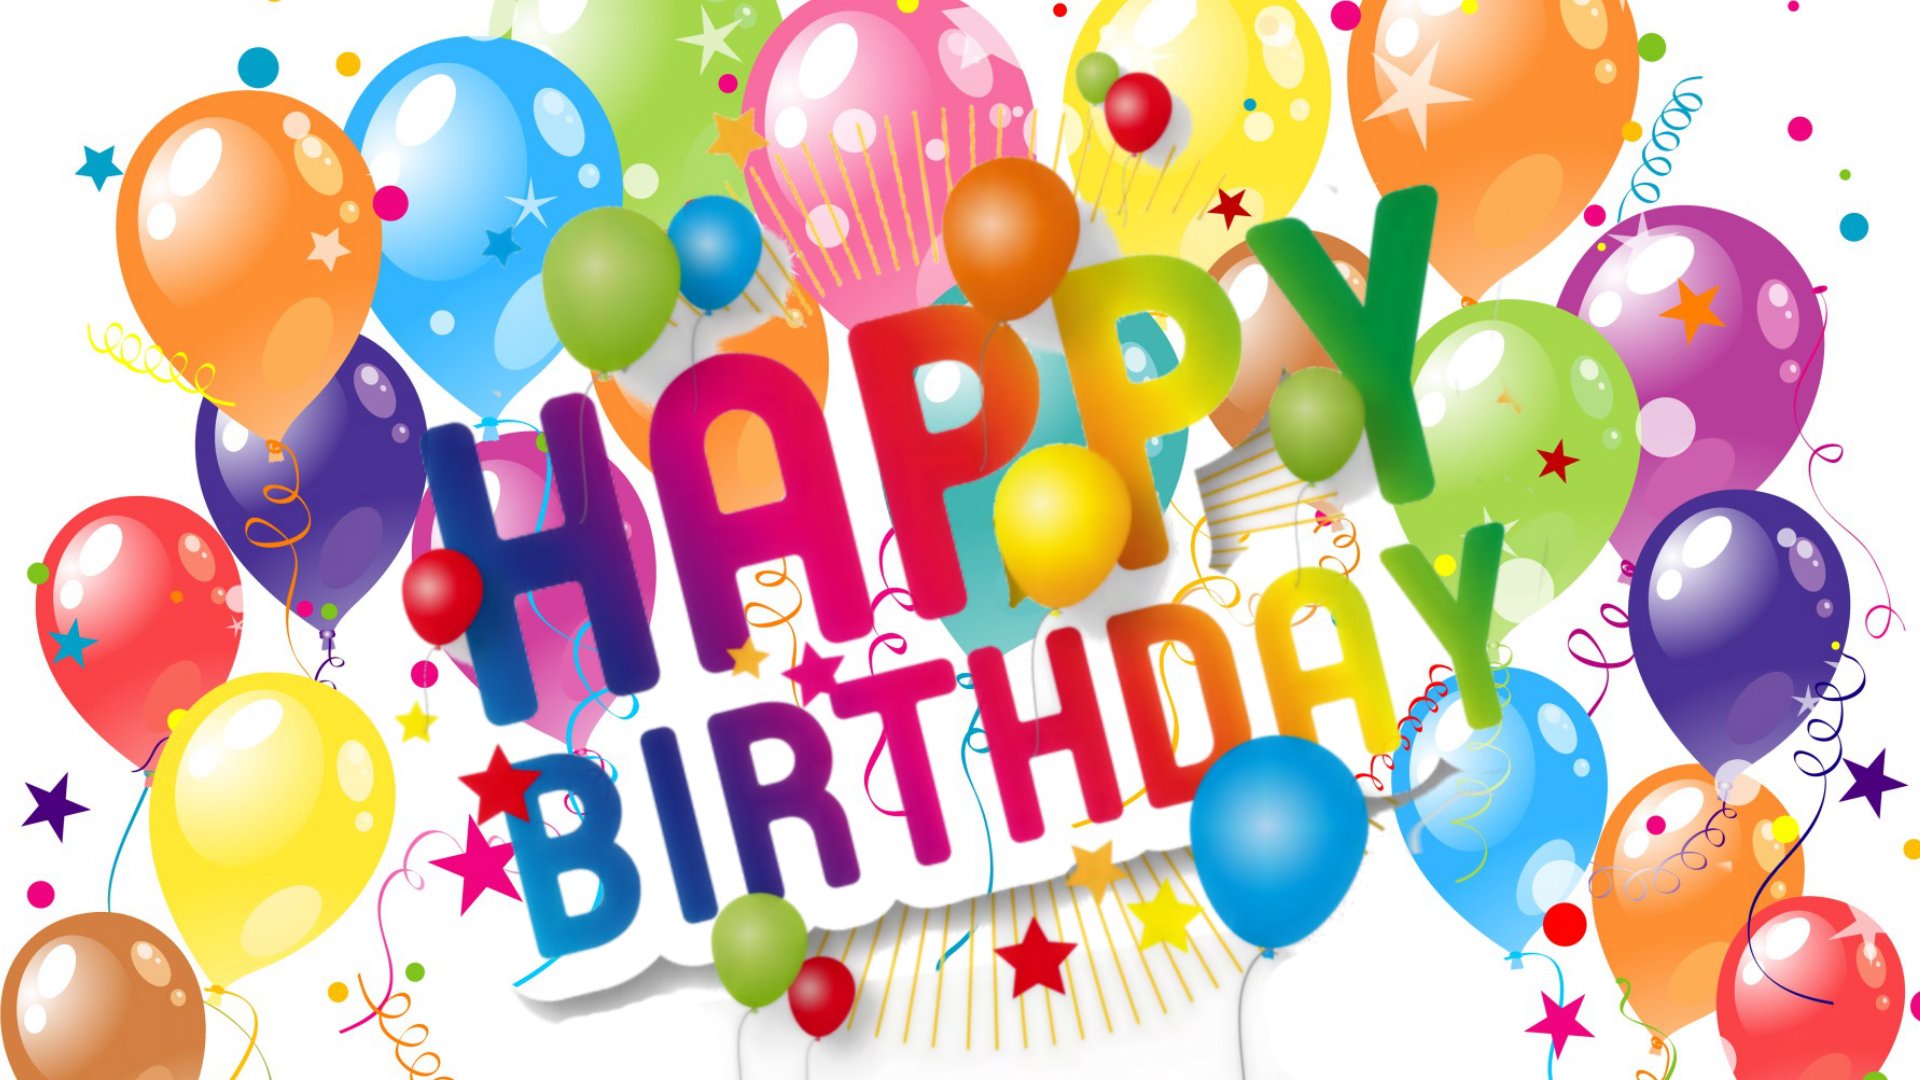 birthday wallpaper free download,balloon,party supply,celebrating,birthday,font